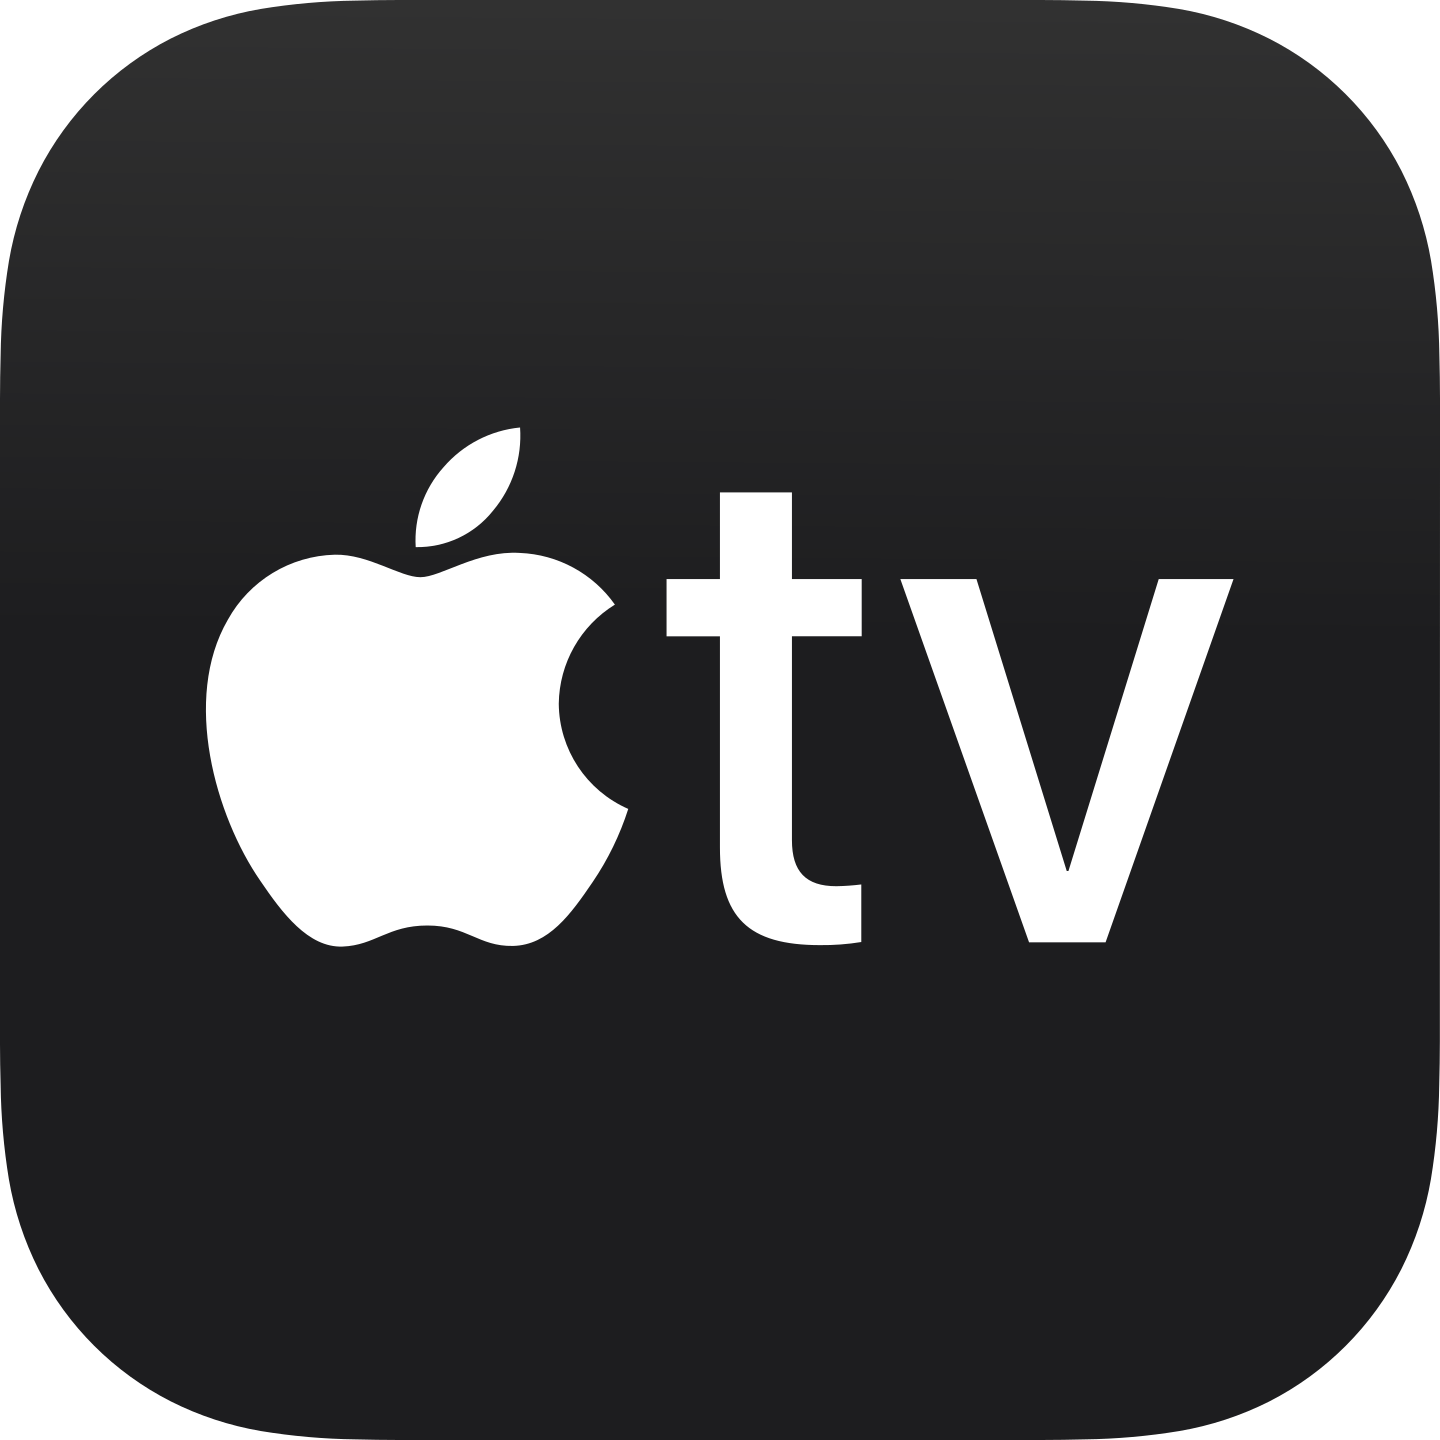 apple tv logo 2 - Apple TV+ Logo